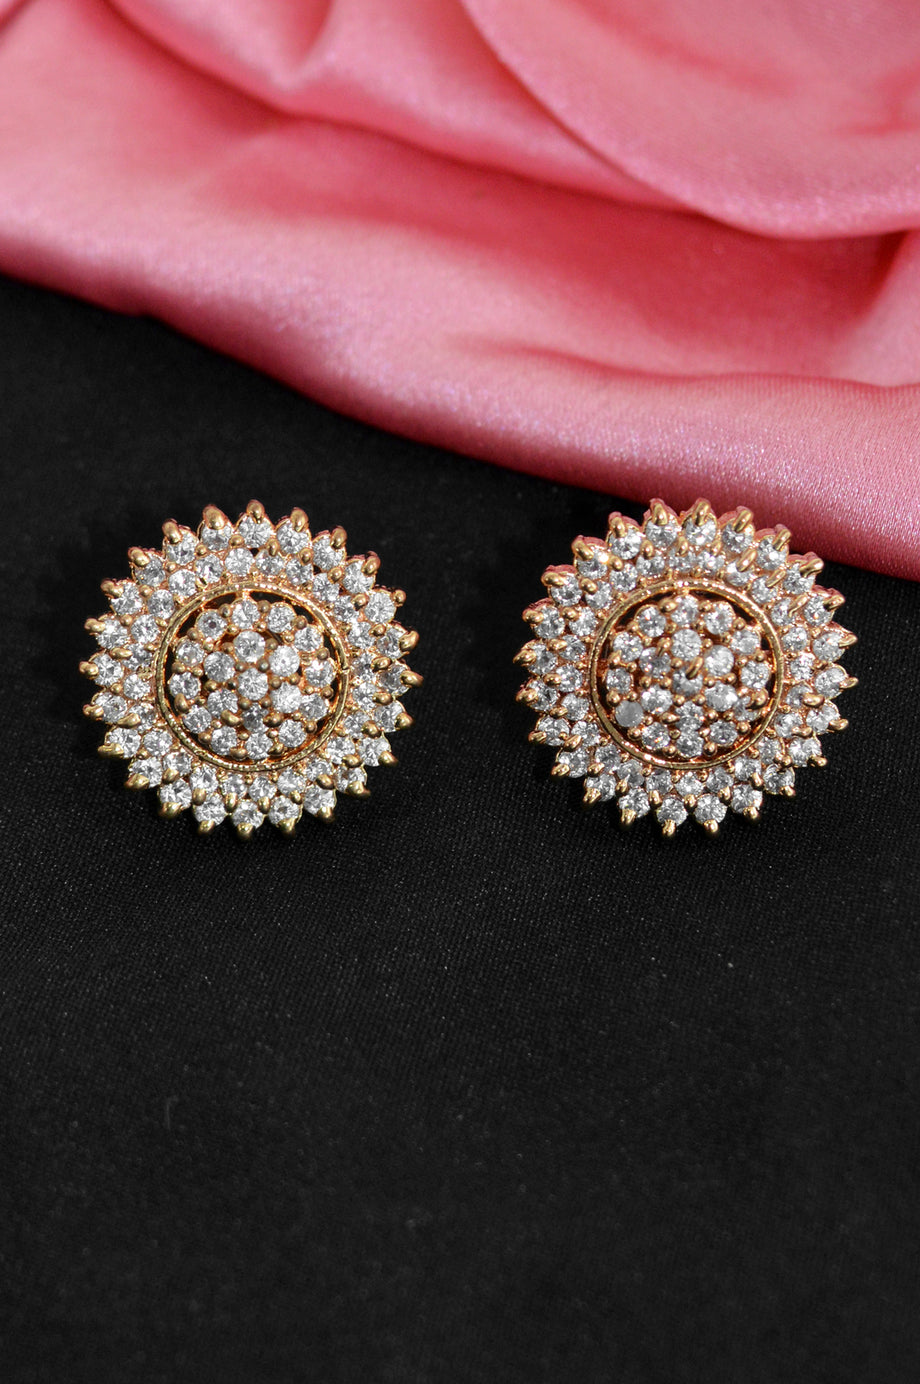 Buy Silver Earrings Online in Ahmedabad, India at Best Price | Anmol Silver